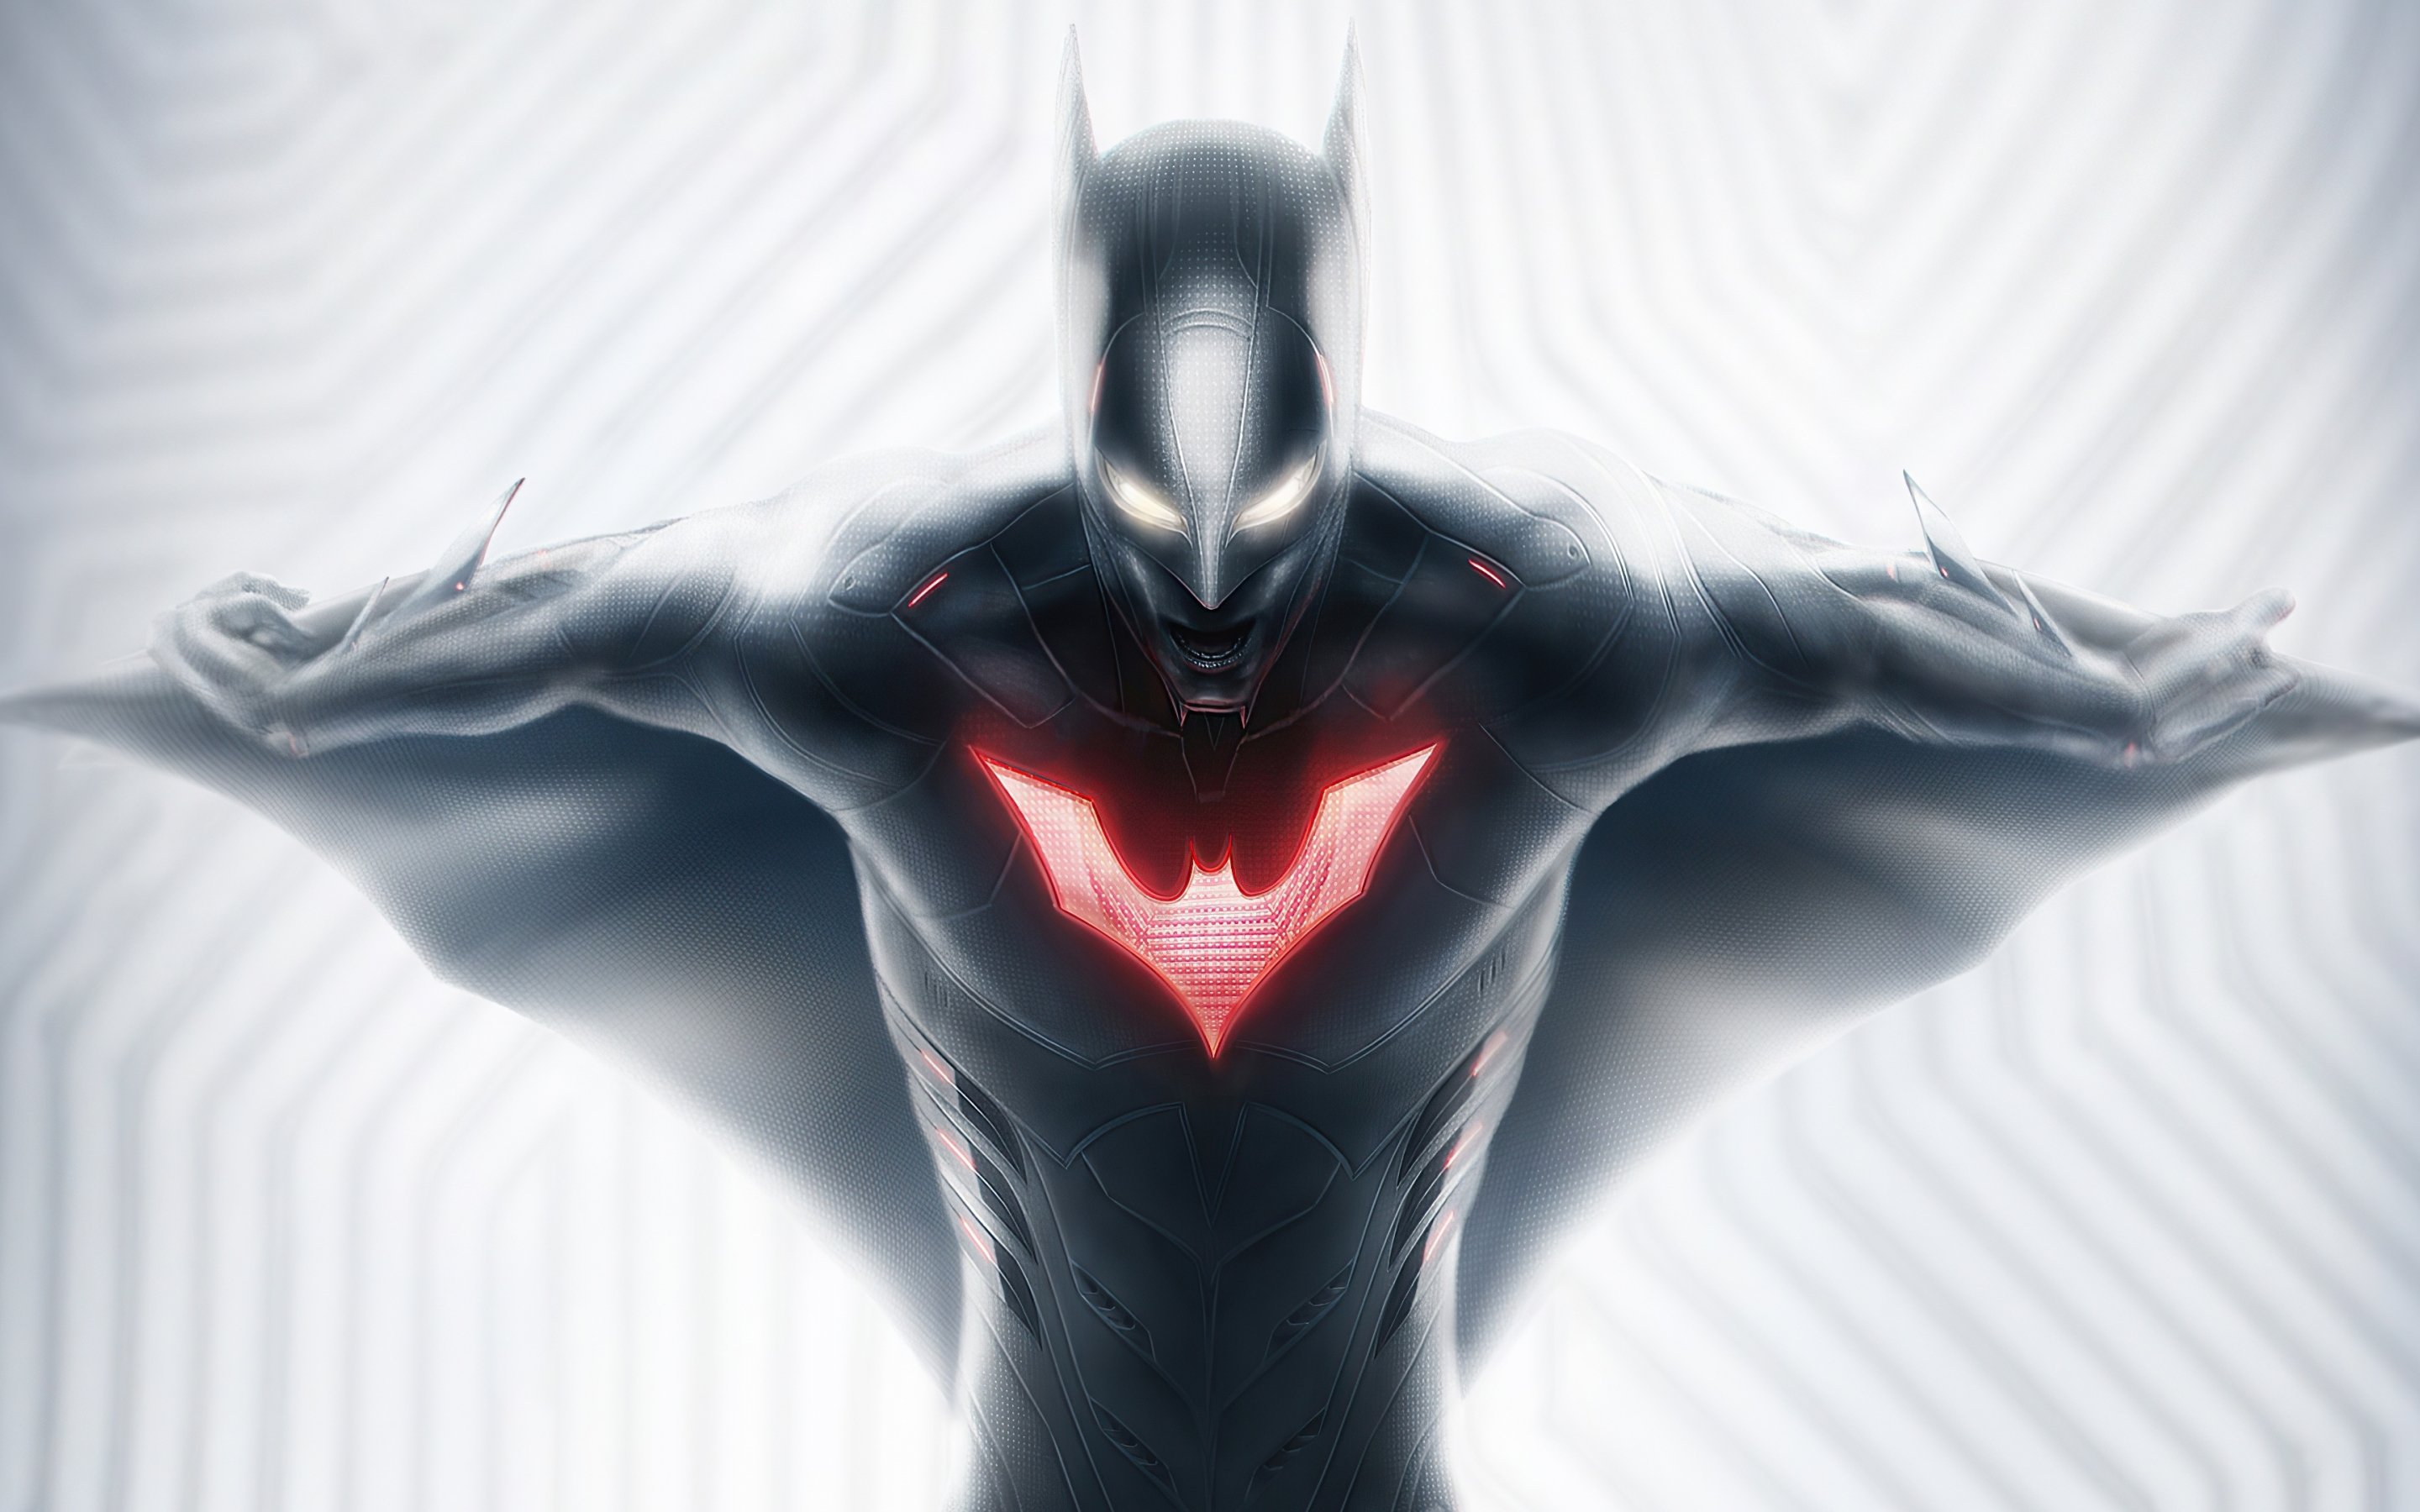 Batman beyond, tech suit, animation show, art, 2880x1800 wallpaper